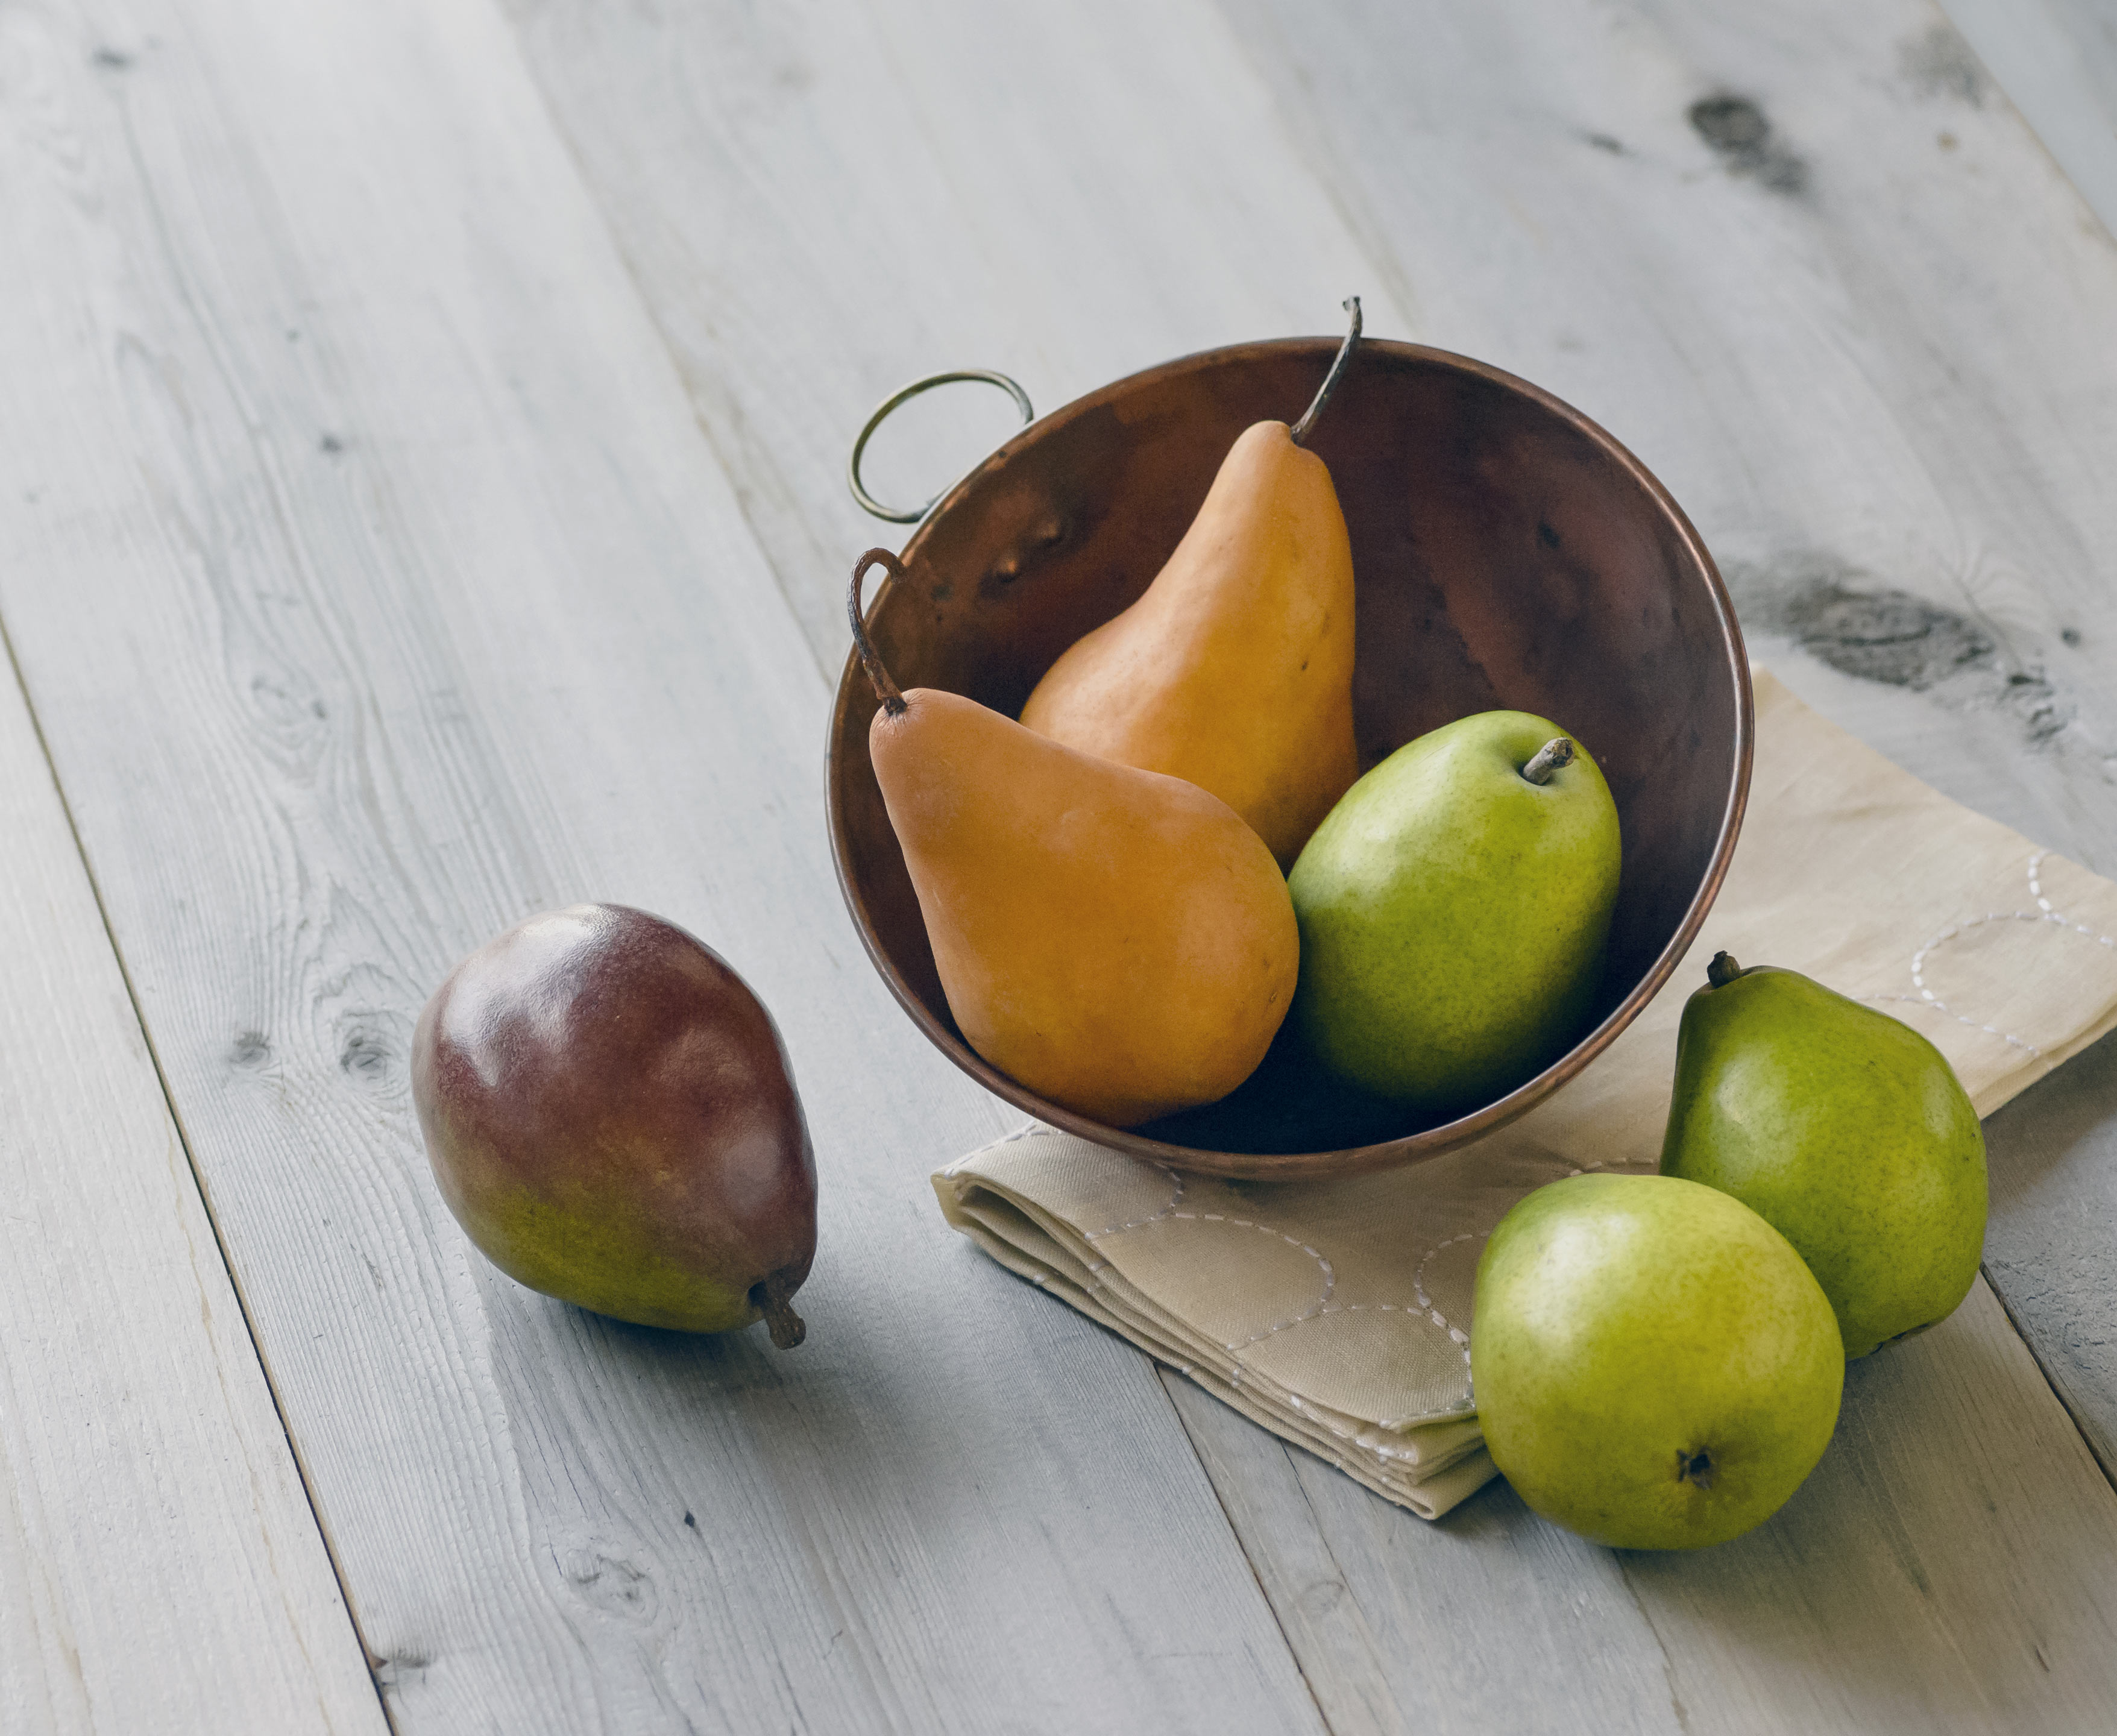 We ️ Pears in February - Price Chopper - Market 32